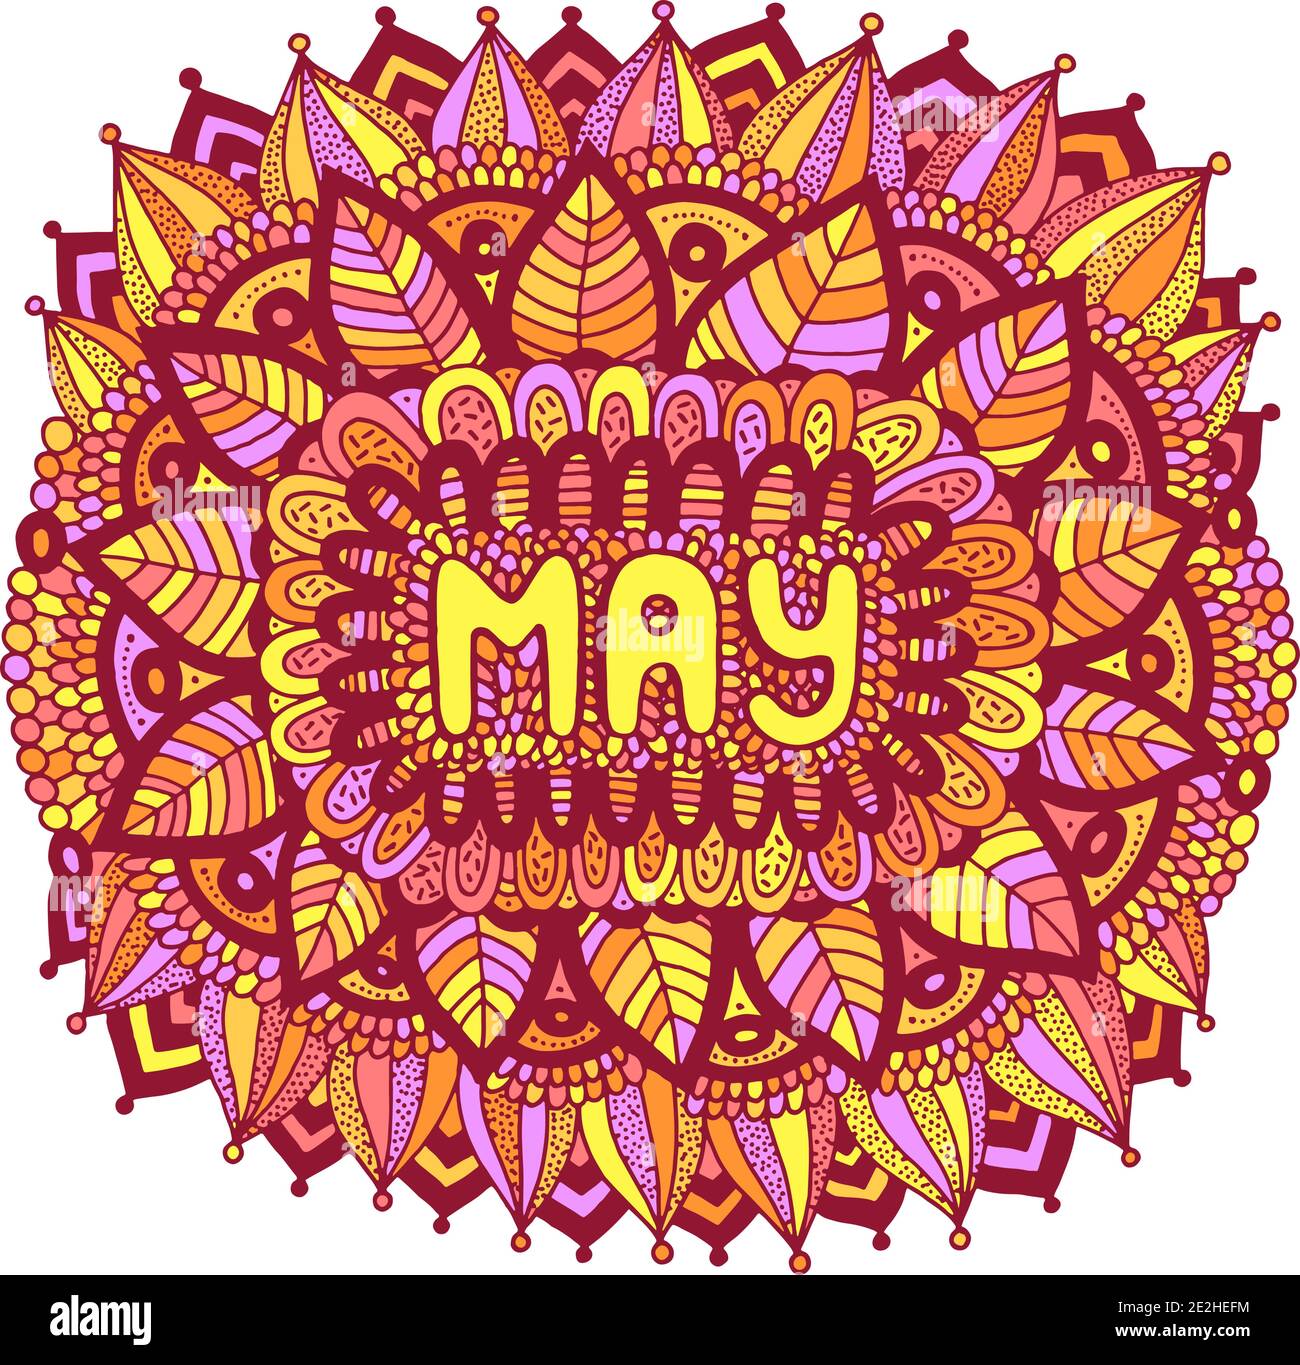 Mai - farbenfrohe Illustration mit Monatsnamen. Helle zendoodle Mandala mit Monaten des Jahres. Jahr monatlich Kalender Design Art. Zentangle Stil Kunst Stock Vektor